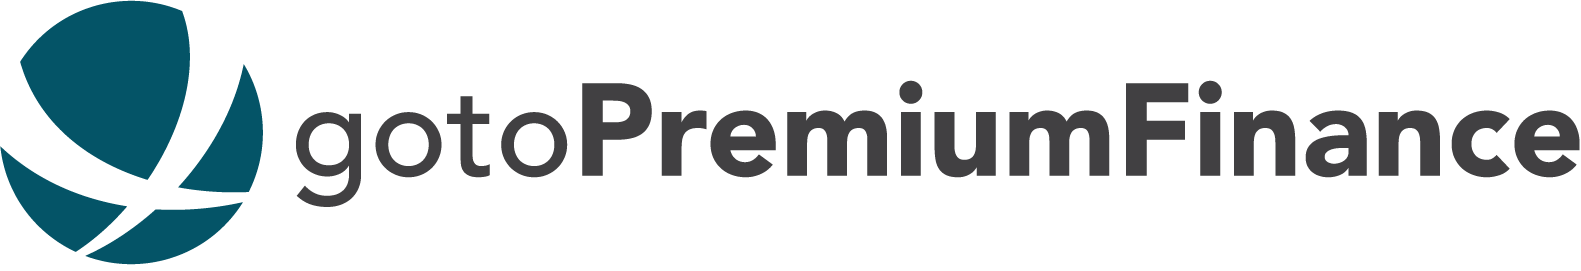 gotoPremiumFinance Logo